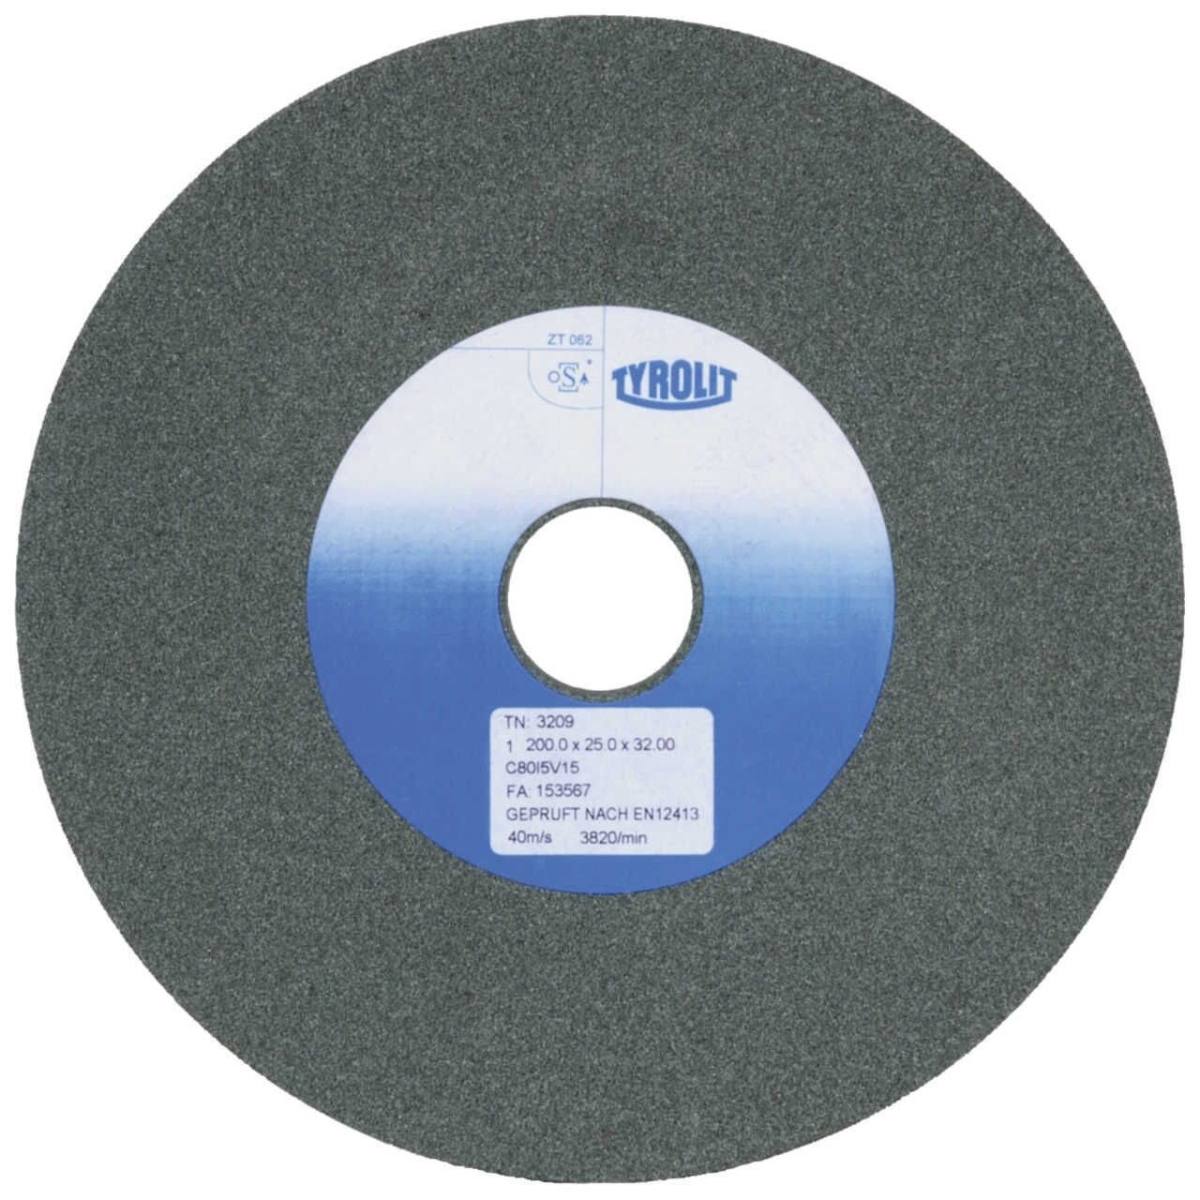 TYROLIT discos de desbaste cerámicos convencionales DxDxH 150x25x32 Para metales no férricos, forma: 1, Art. 34287484